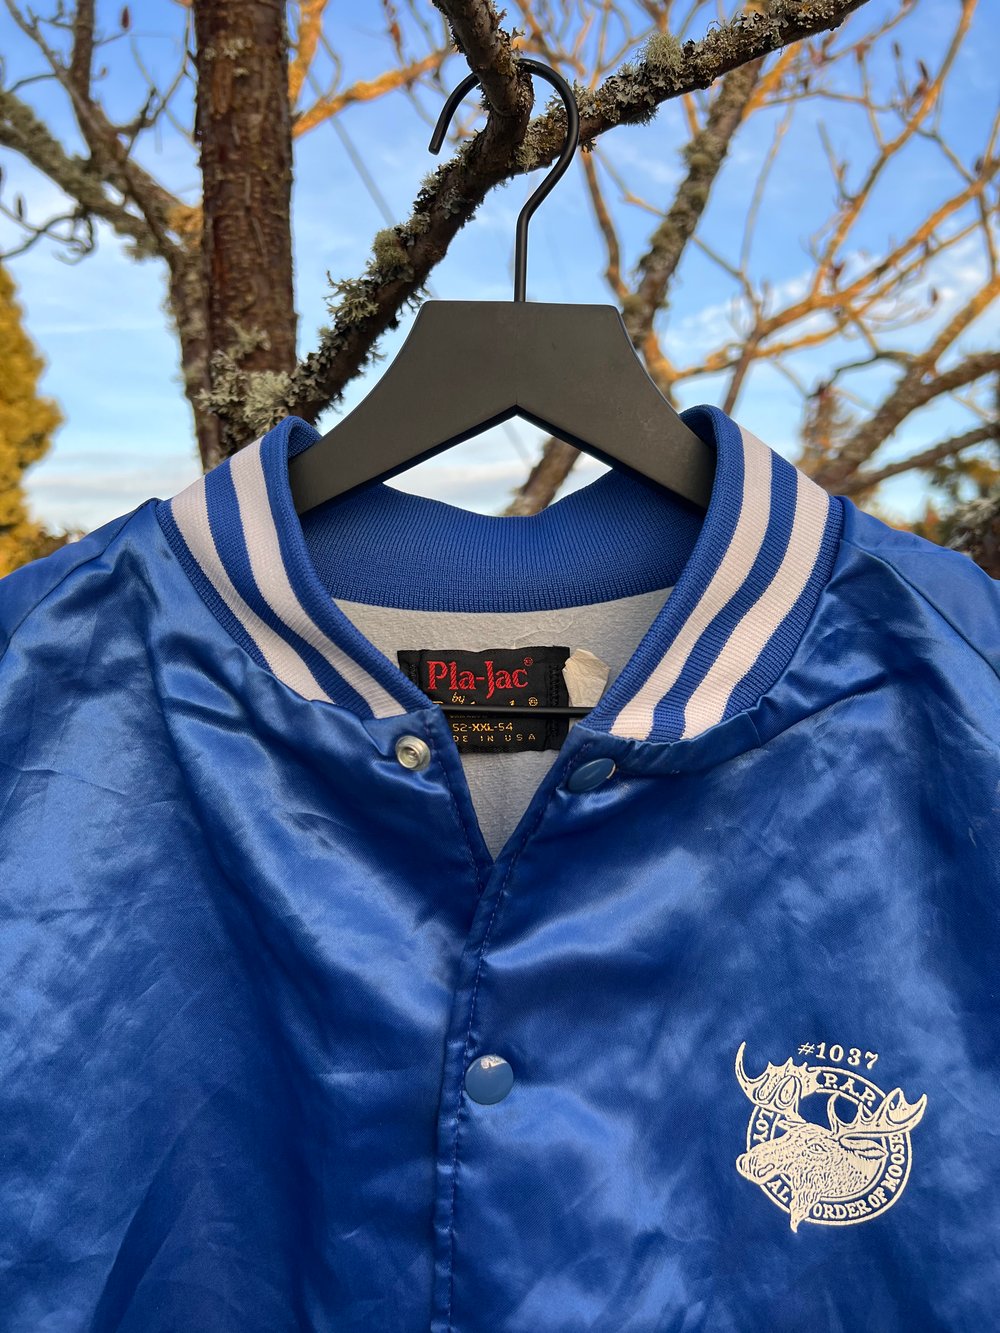 Vintage Roseburg Moose Lodge Blue Satin Jacket (XXL)